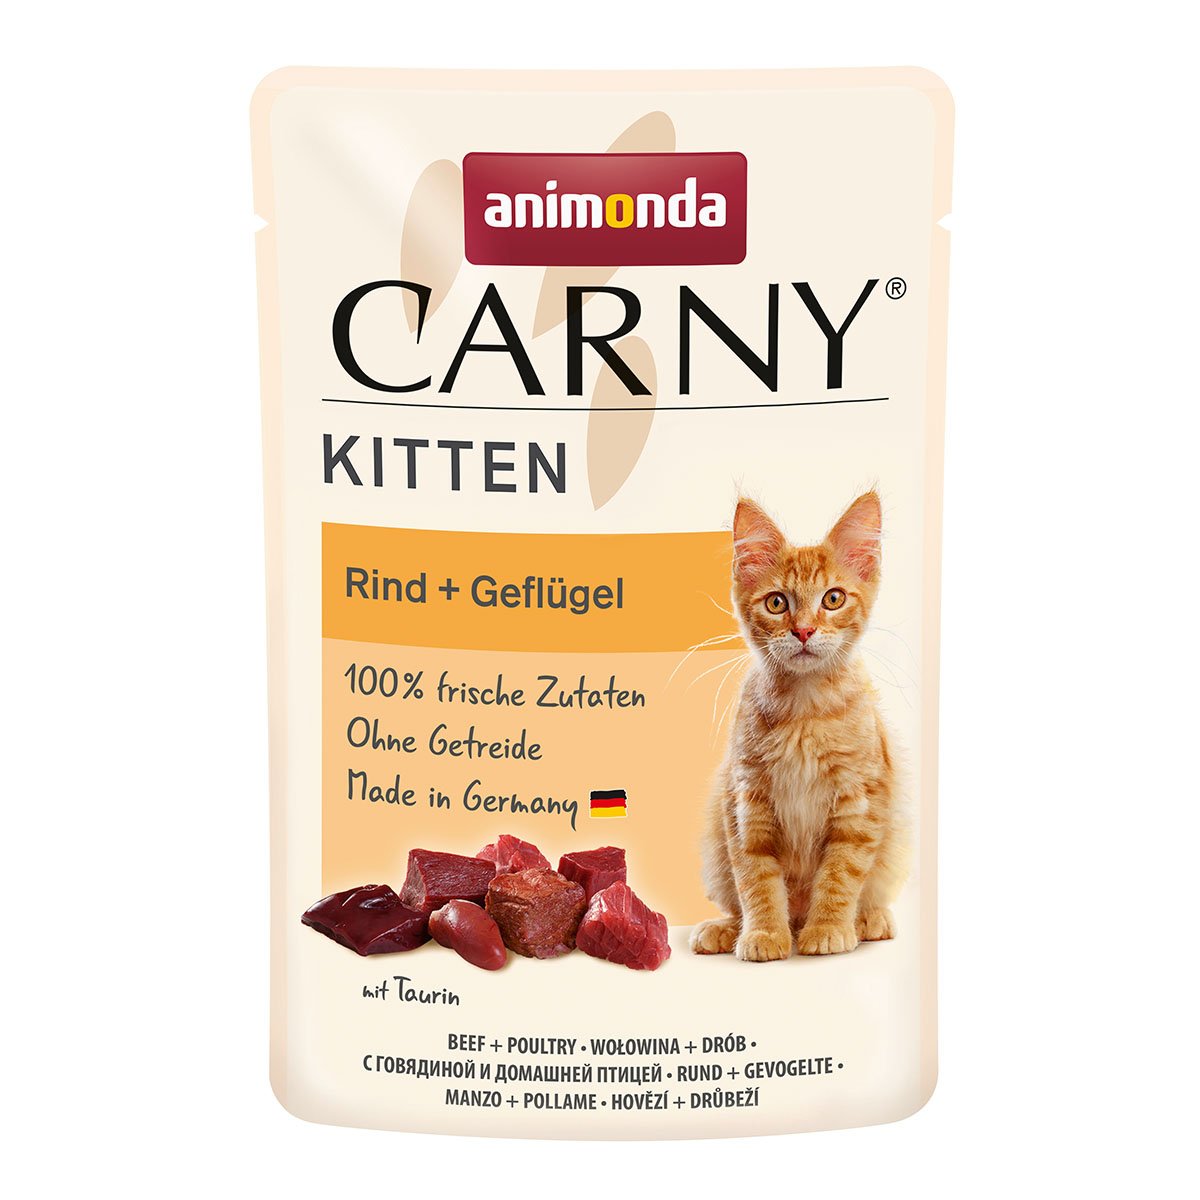 animonda Carny Kitten Rind + Geflügel 12x85g von animonda Carny